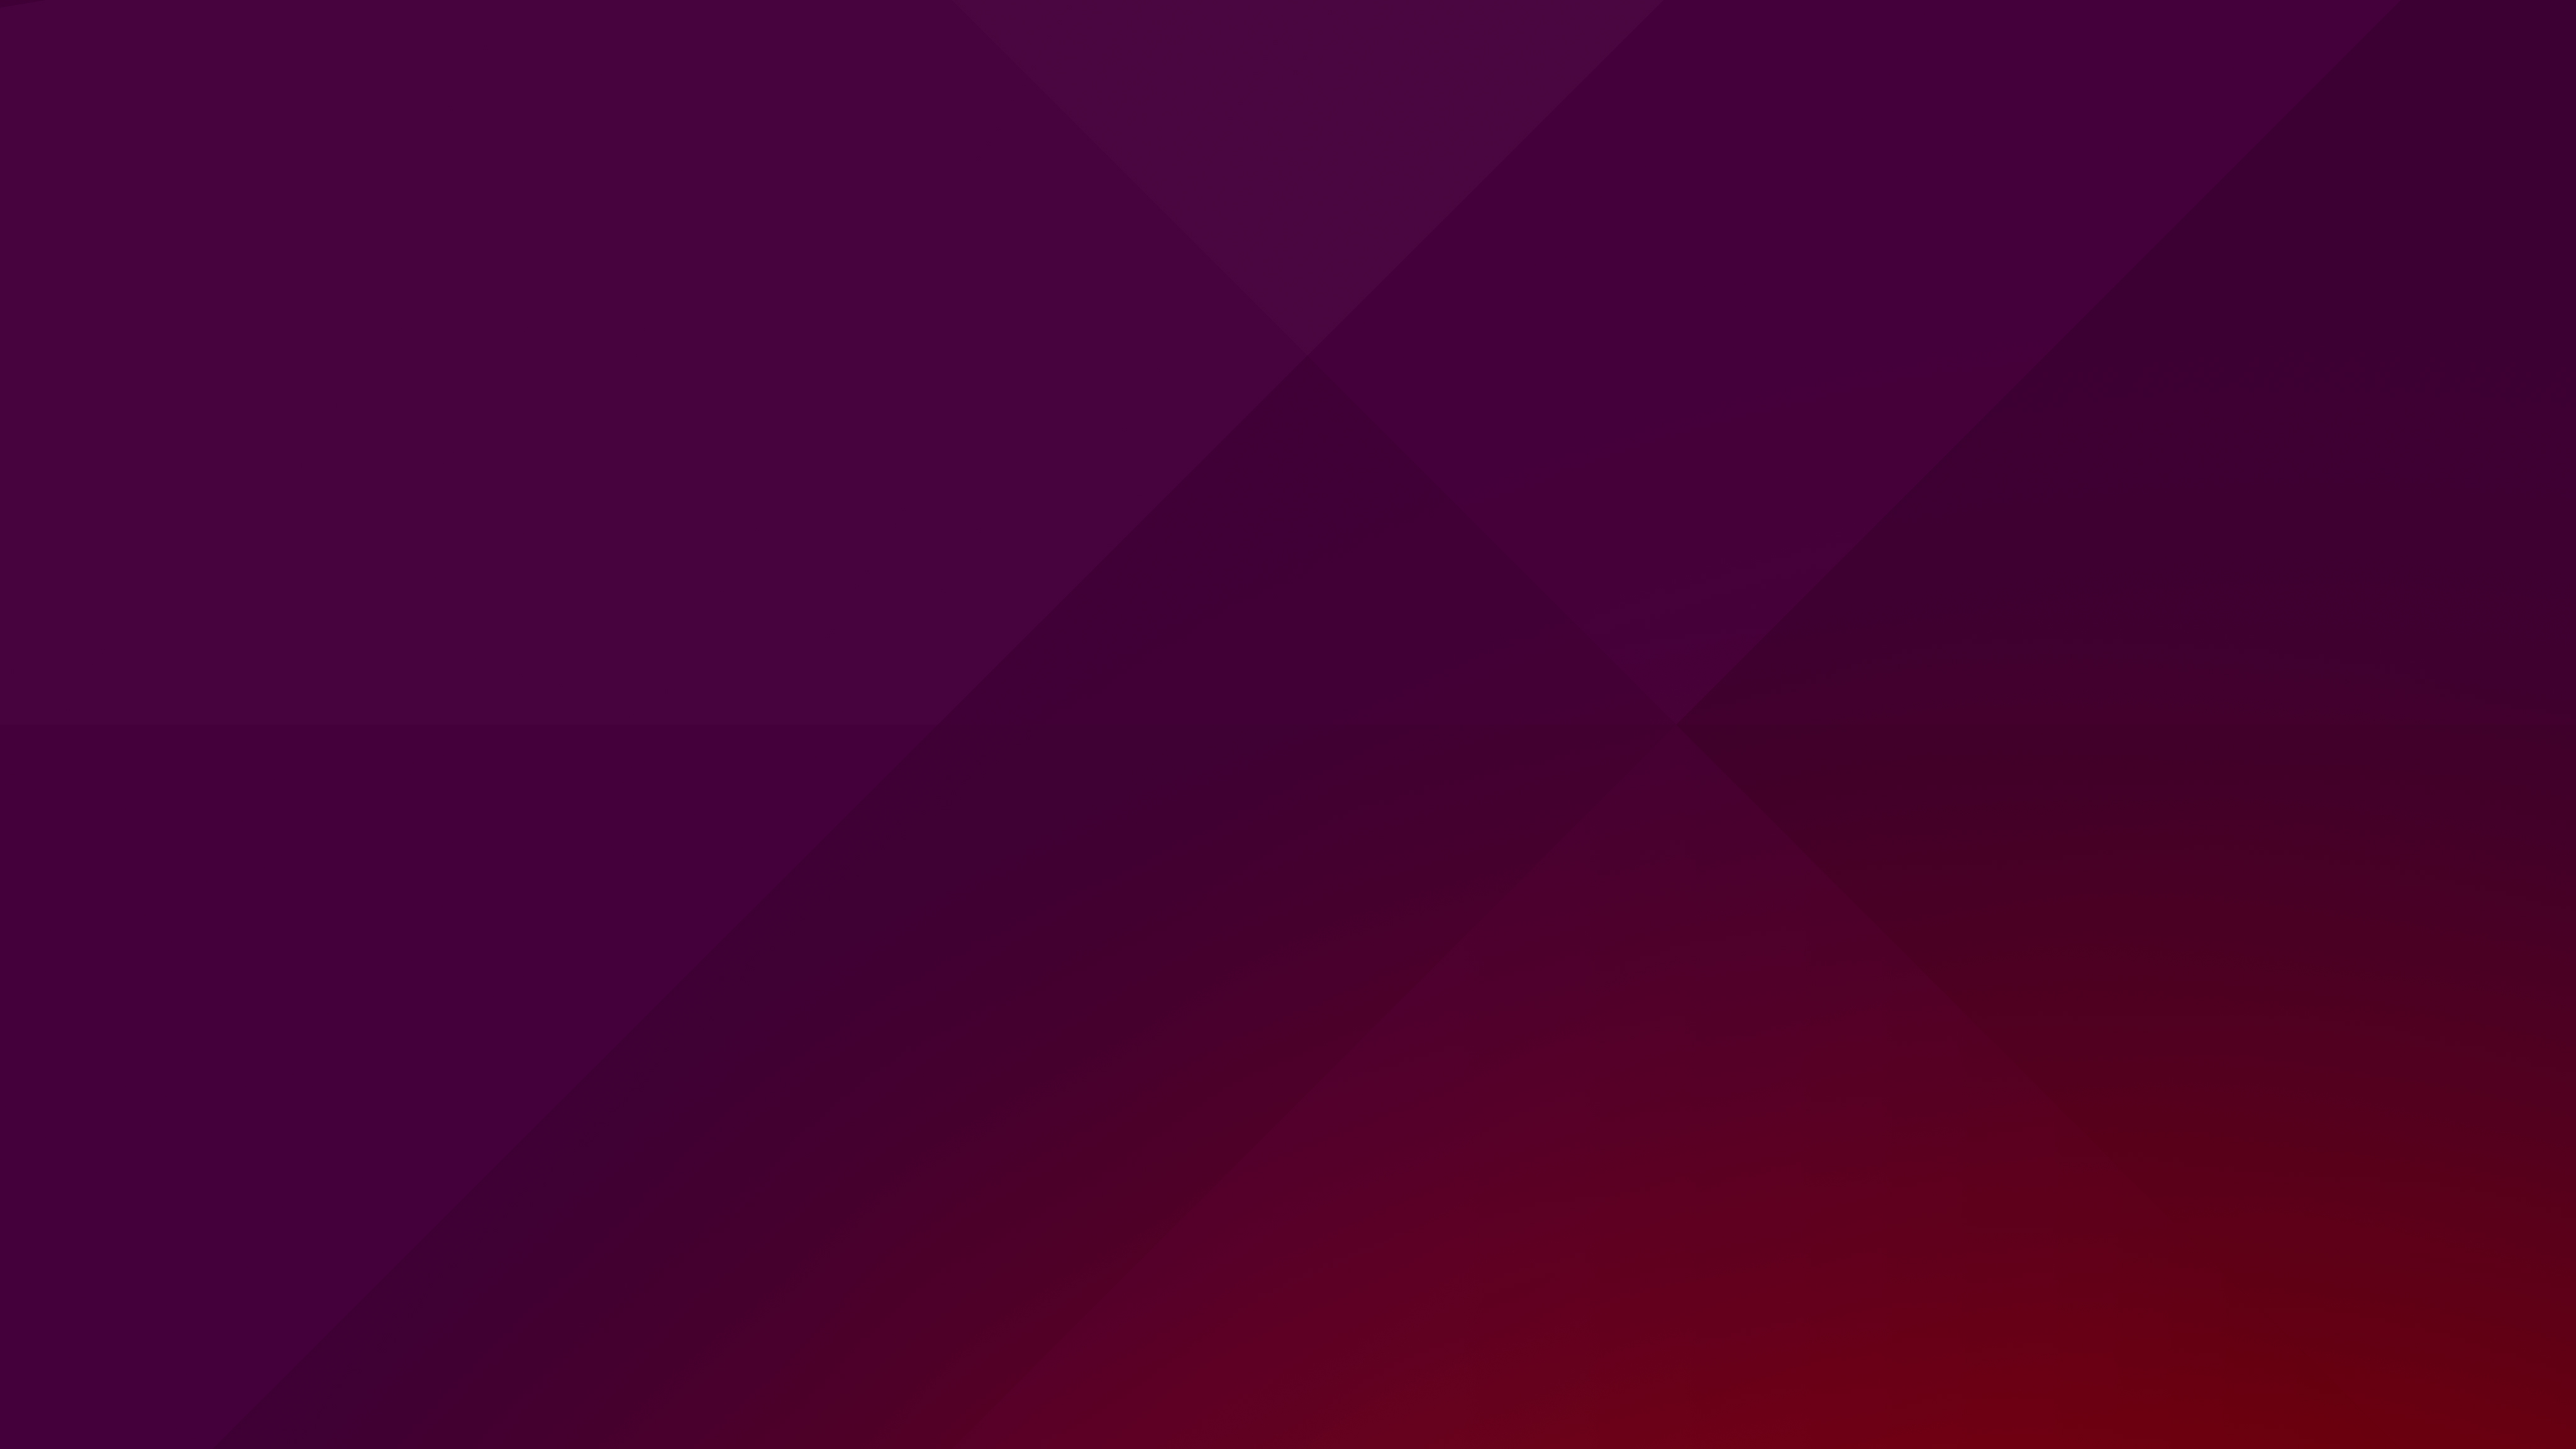 The Default Desktop Wallpaper For Uping Ubuntu Vivid